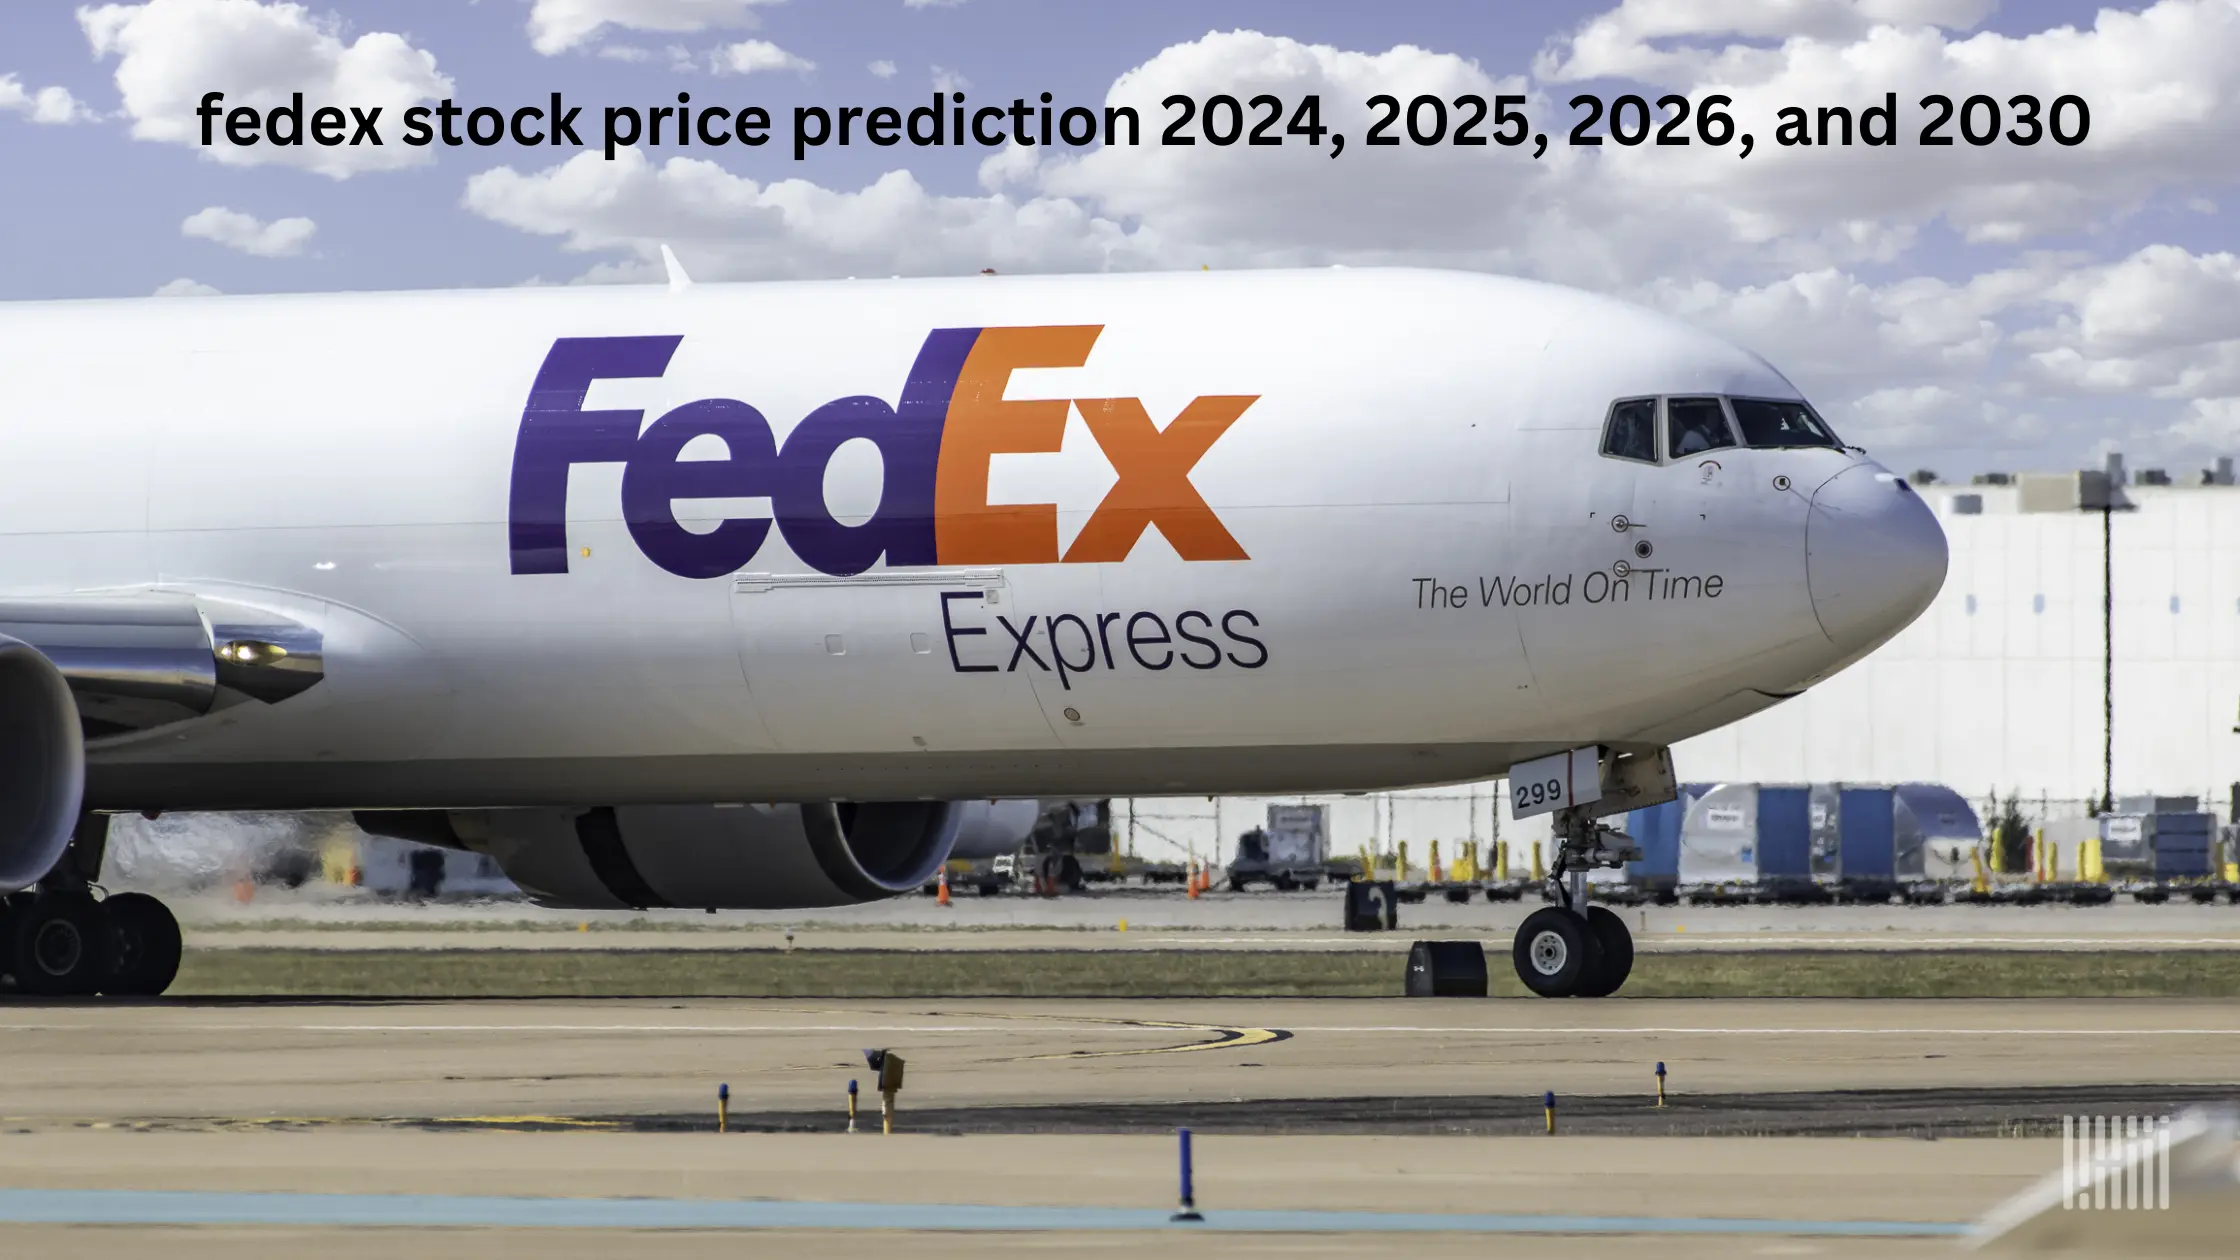 fedex stock price prediction 2024, 2025, 2026, and 2030